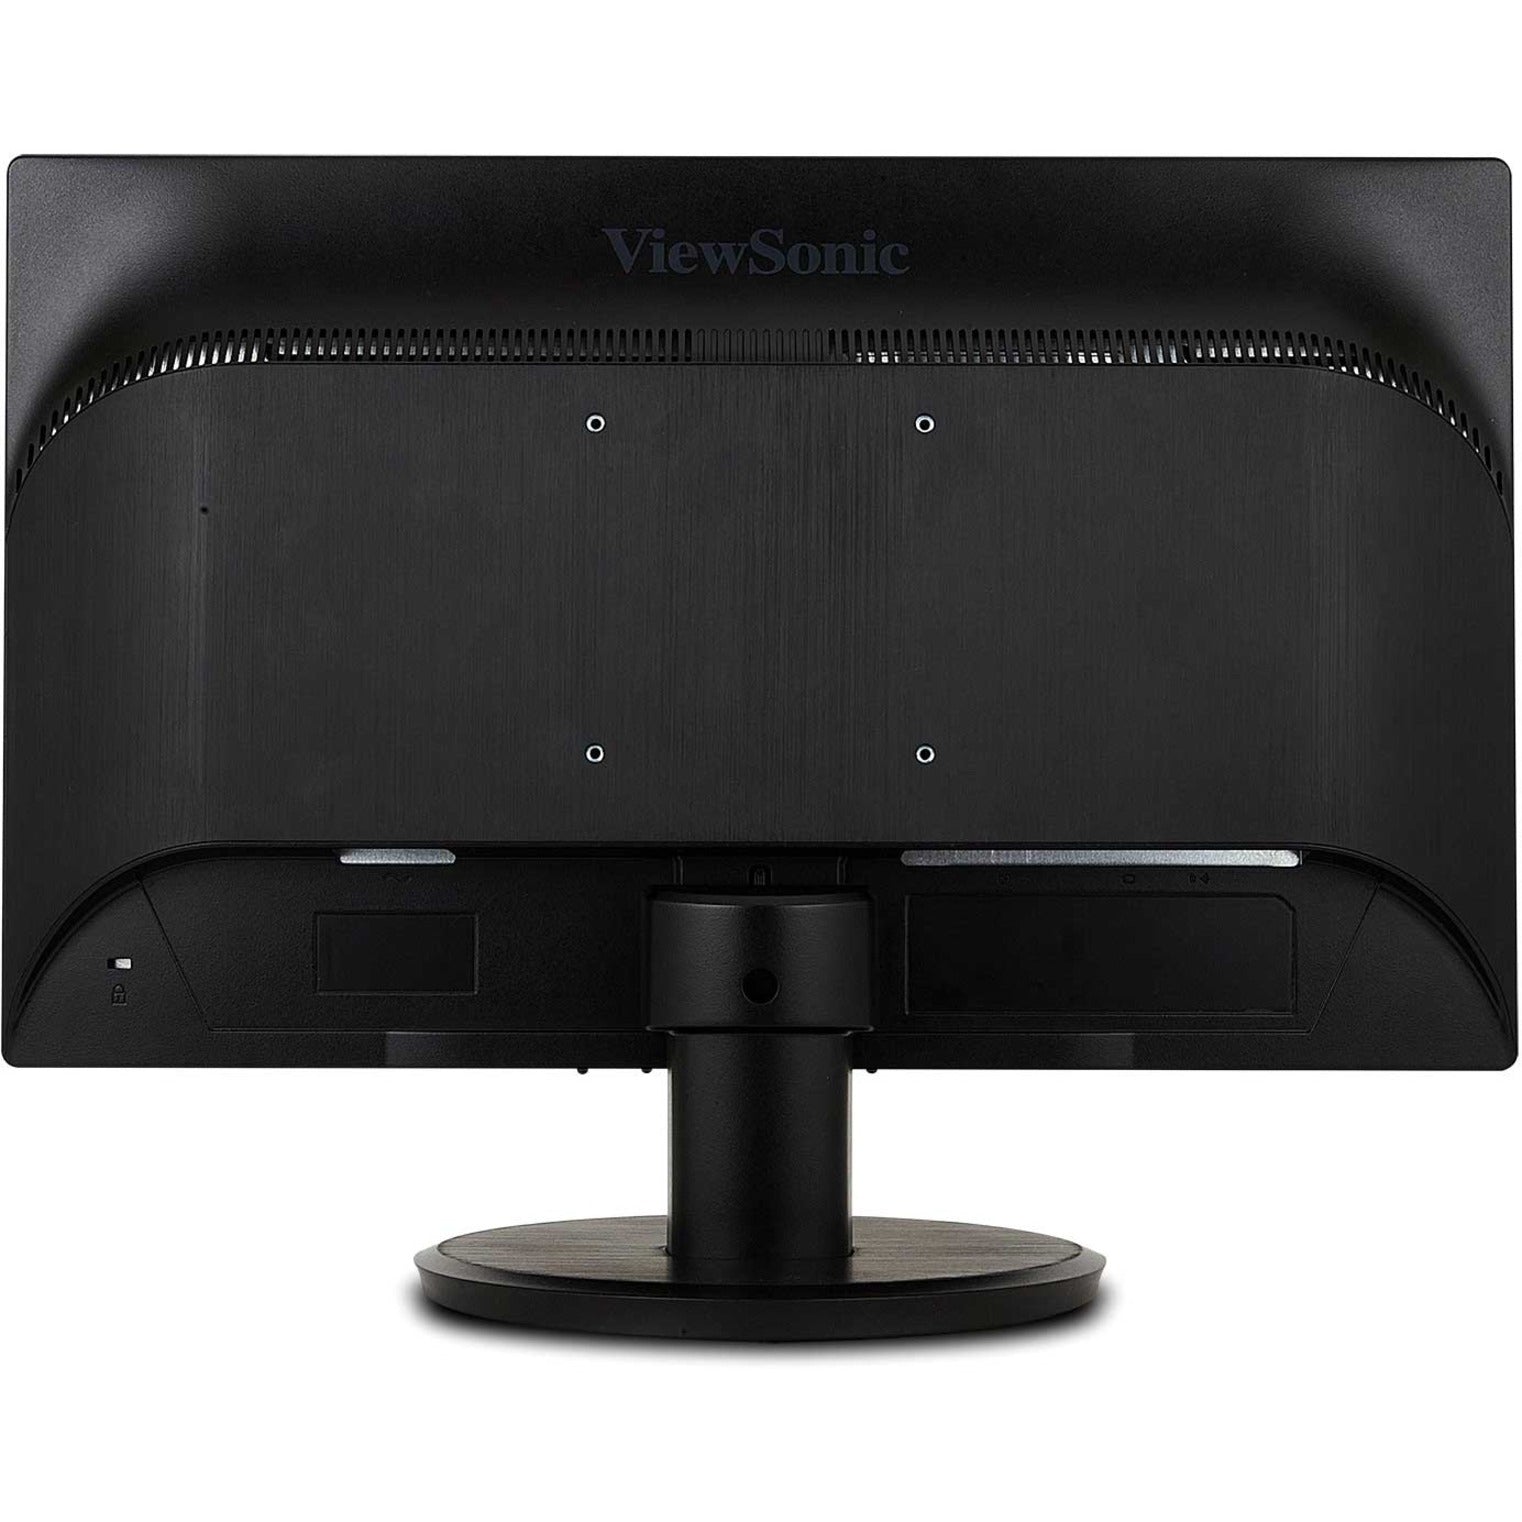 ViewSonic VA2055SA 20" Full HD LED Monitor, Black - High Contrast, Energy Star Certified